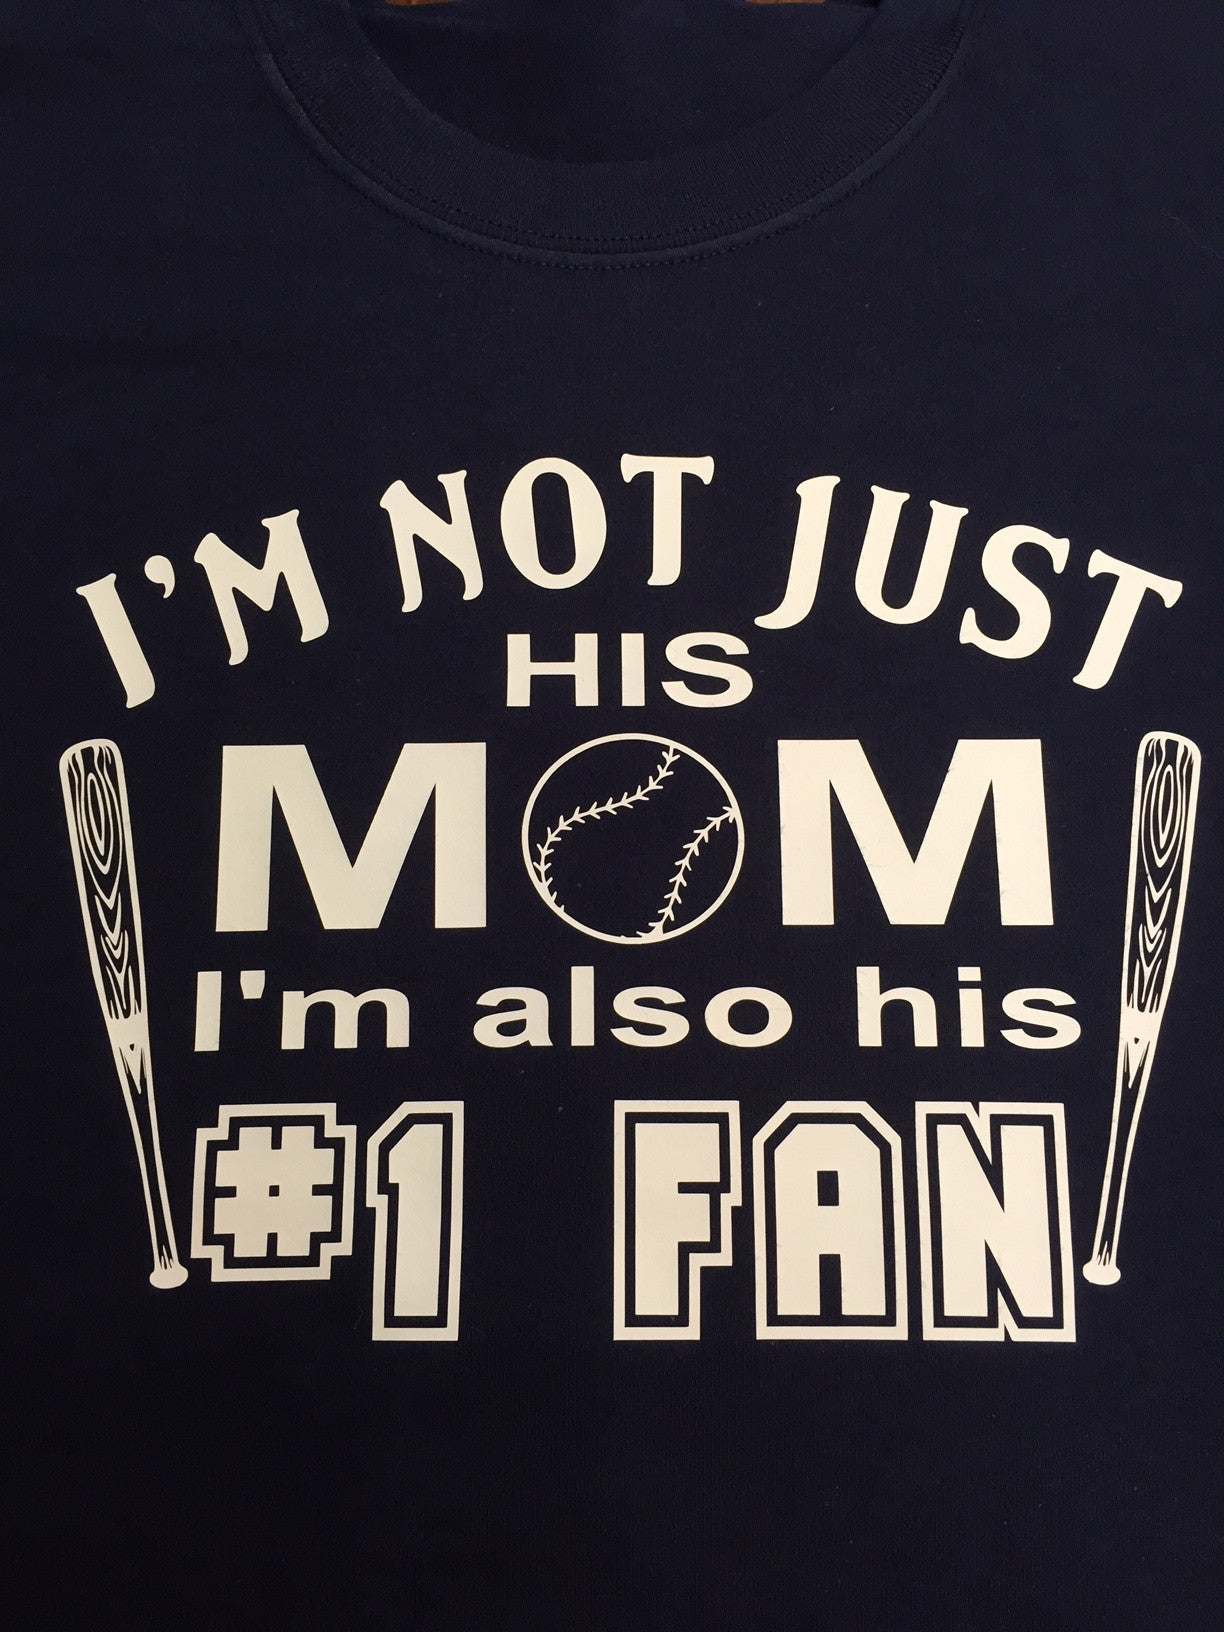 Glitter Baseball Mom Shirt, My Heart is that Field